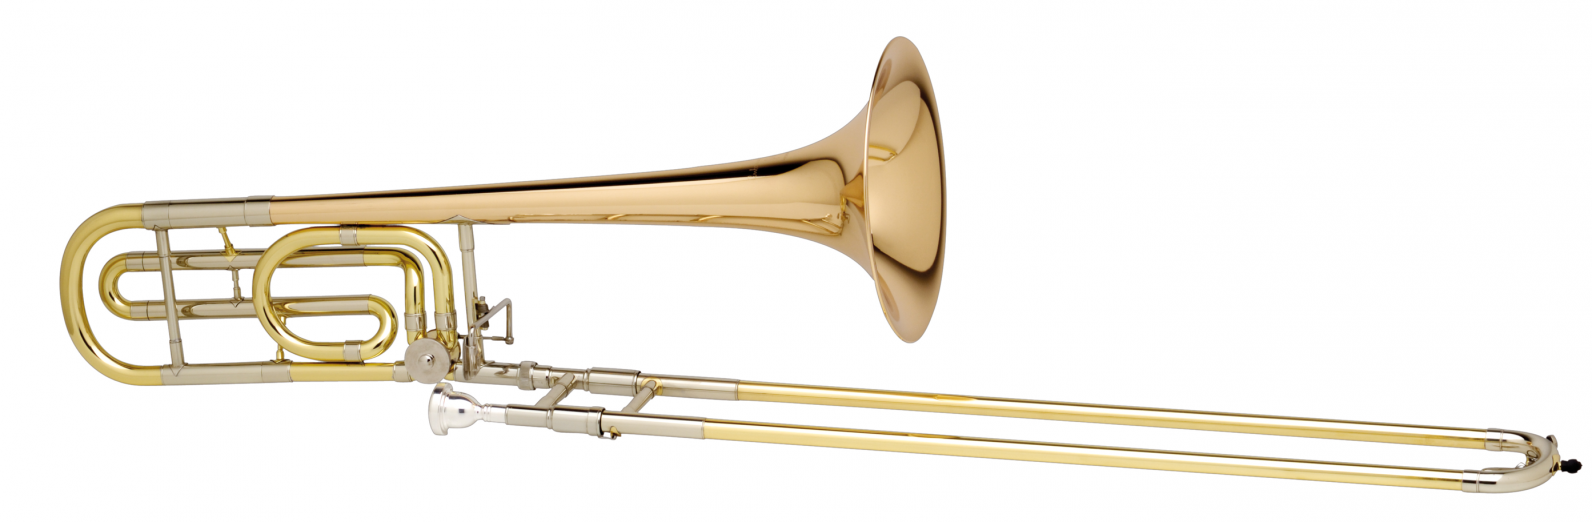 Courtois Legend trombone outfit - yellow brass hand slide.